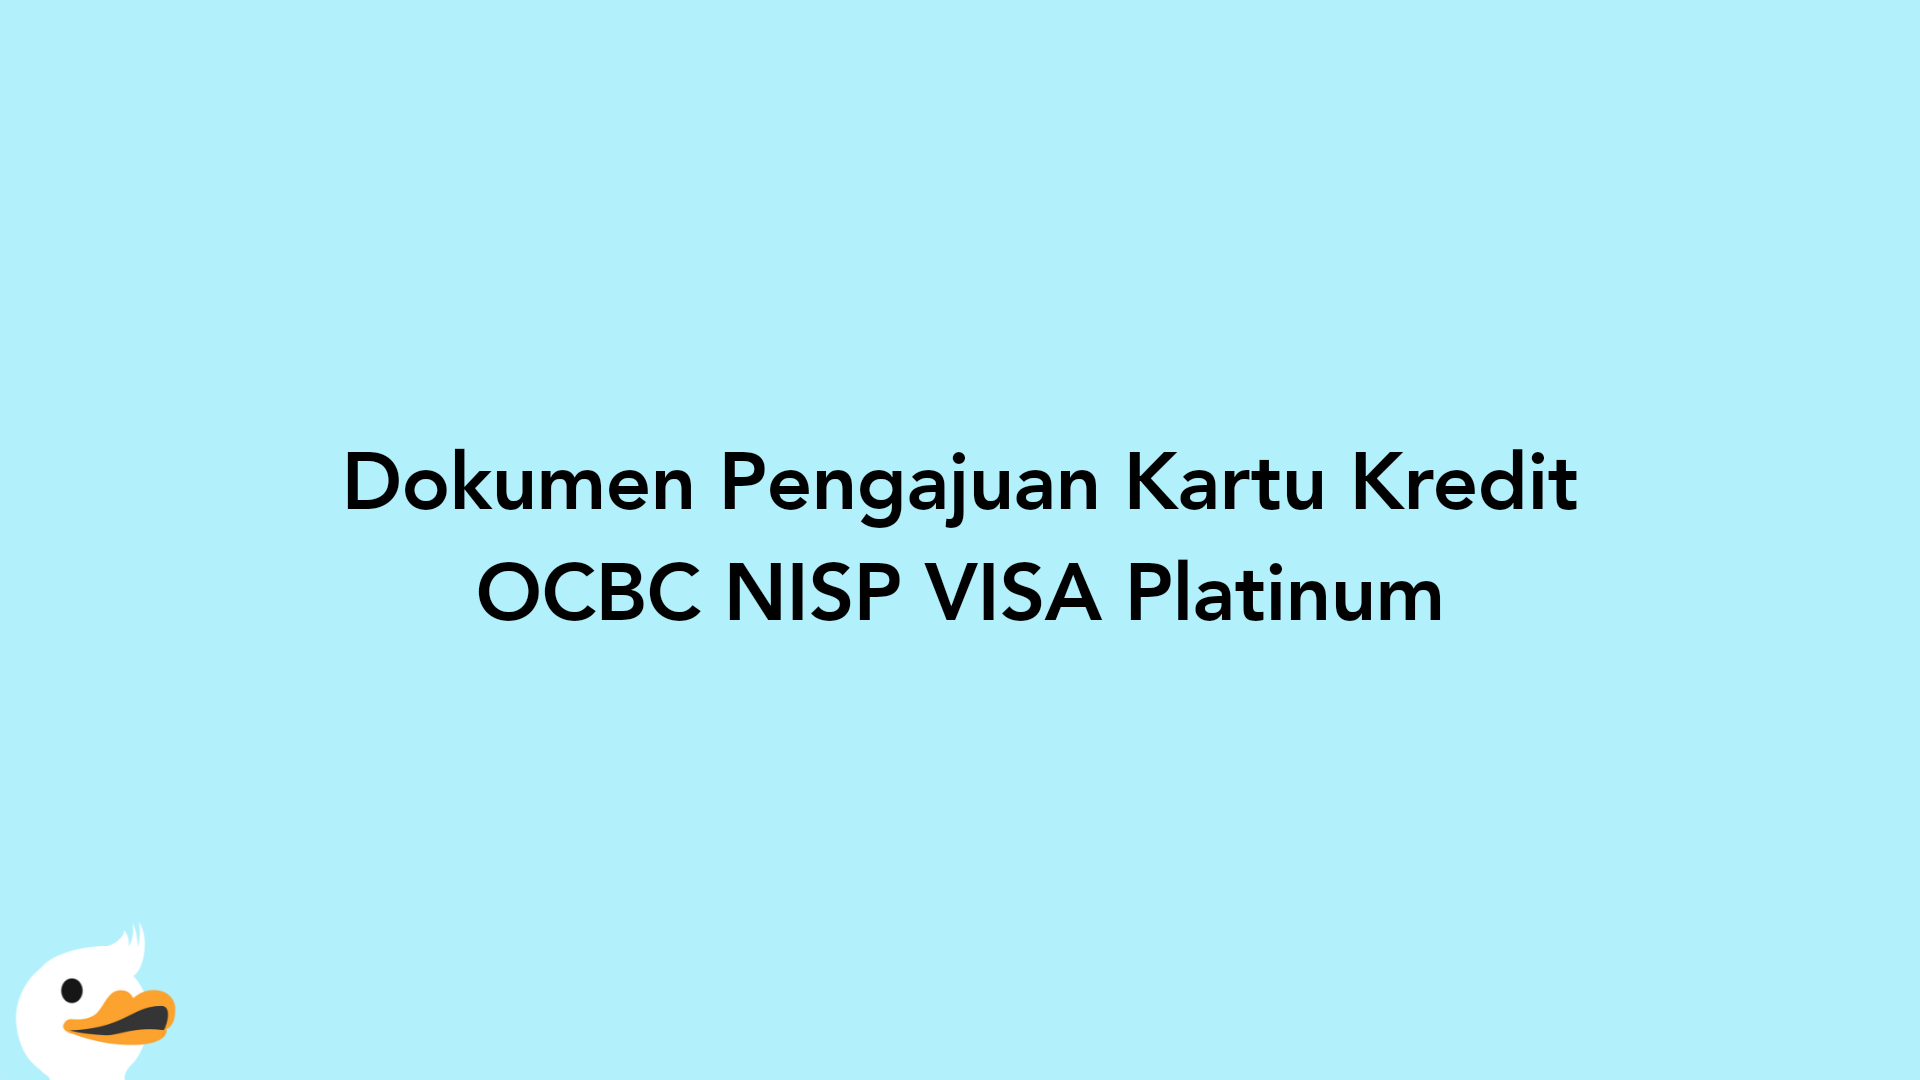 Dokumen Pengajuan Kartu Kredit OCBC NISP VISA Platinum